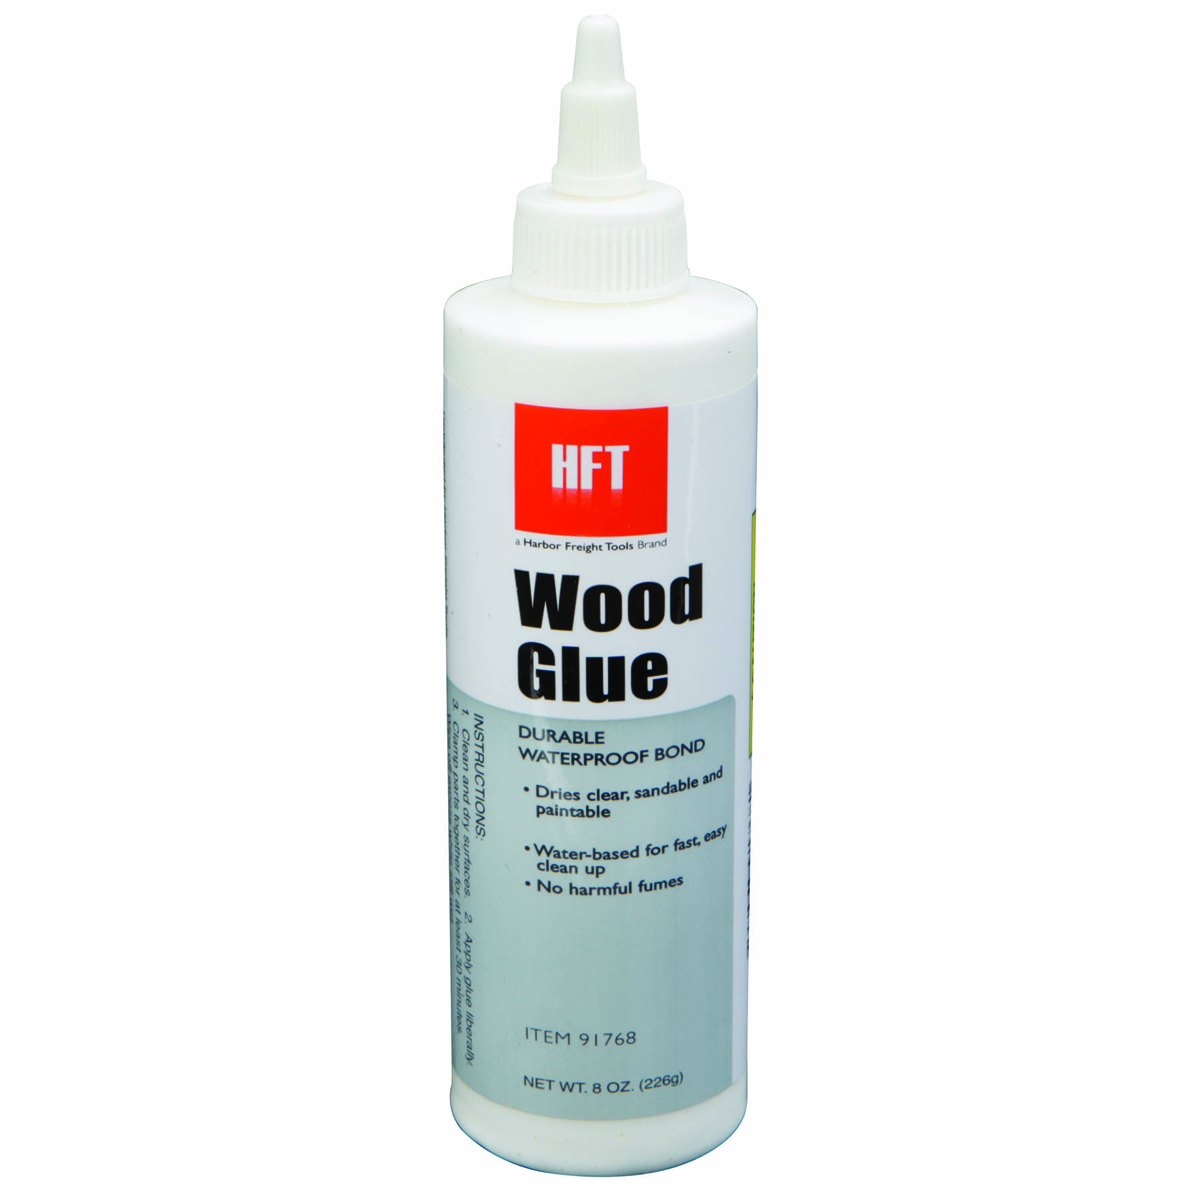 Hft Super Strong Acrylic Wood Glue, 8 oz